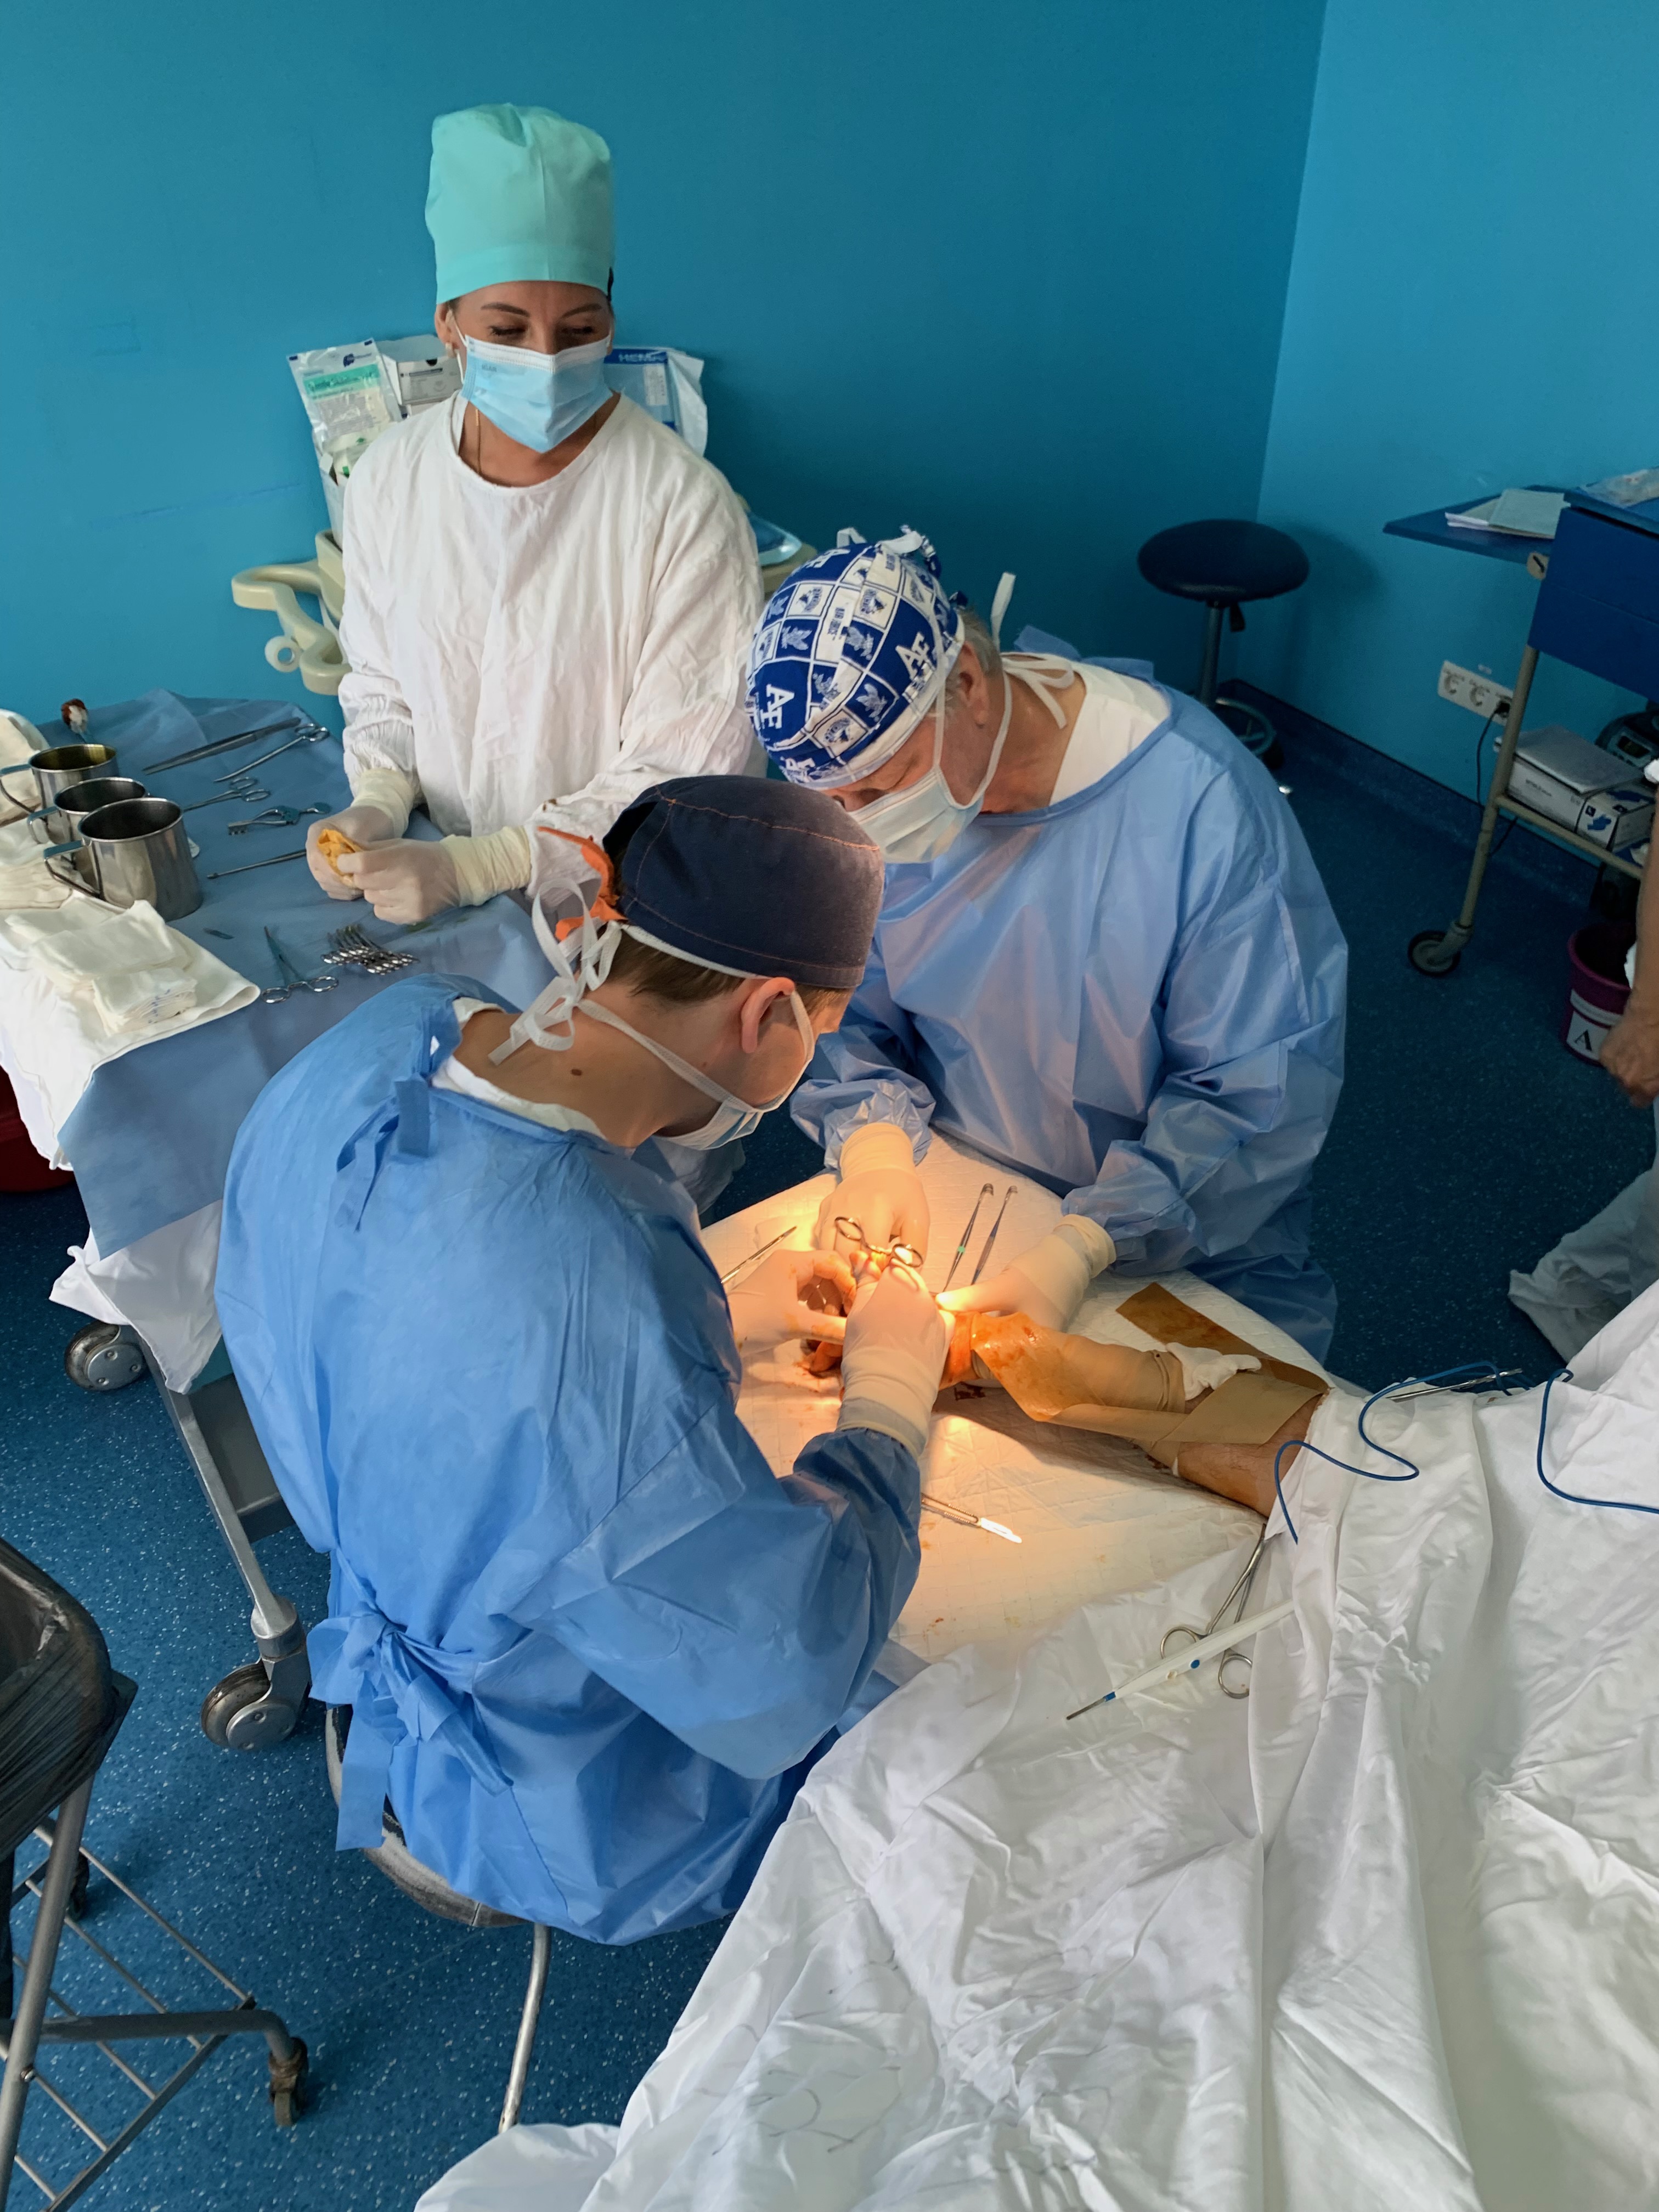 Dr. Beilman performing surgery